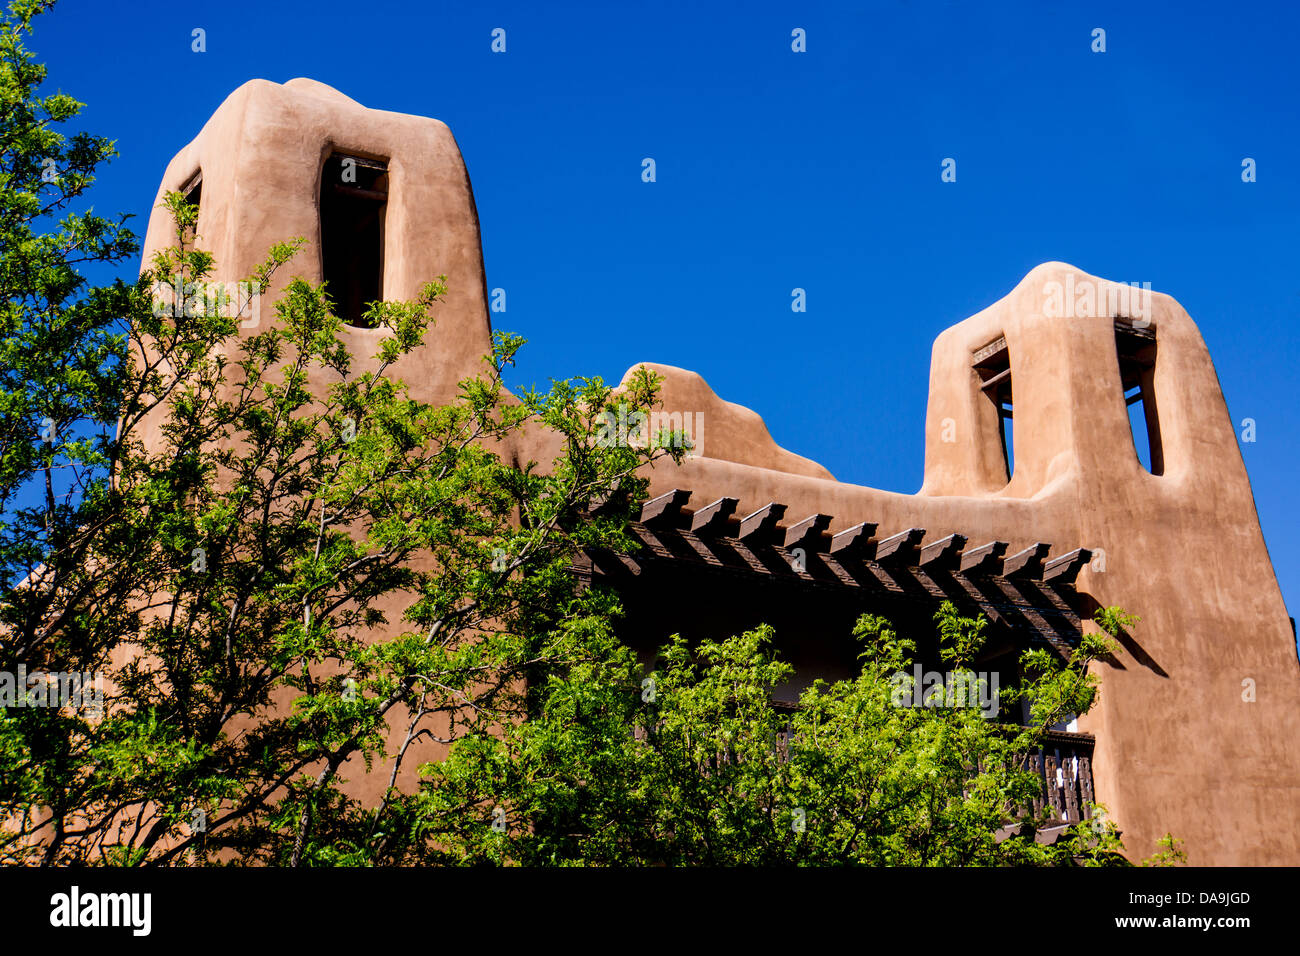 Adobe-Gebäude in Santa Fe New Mexico Stockfoto